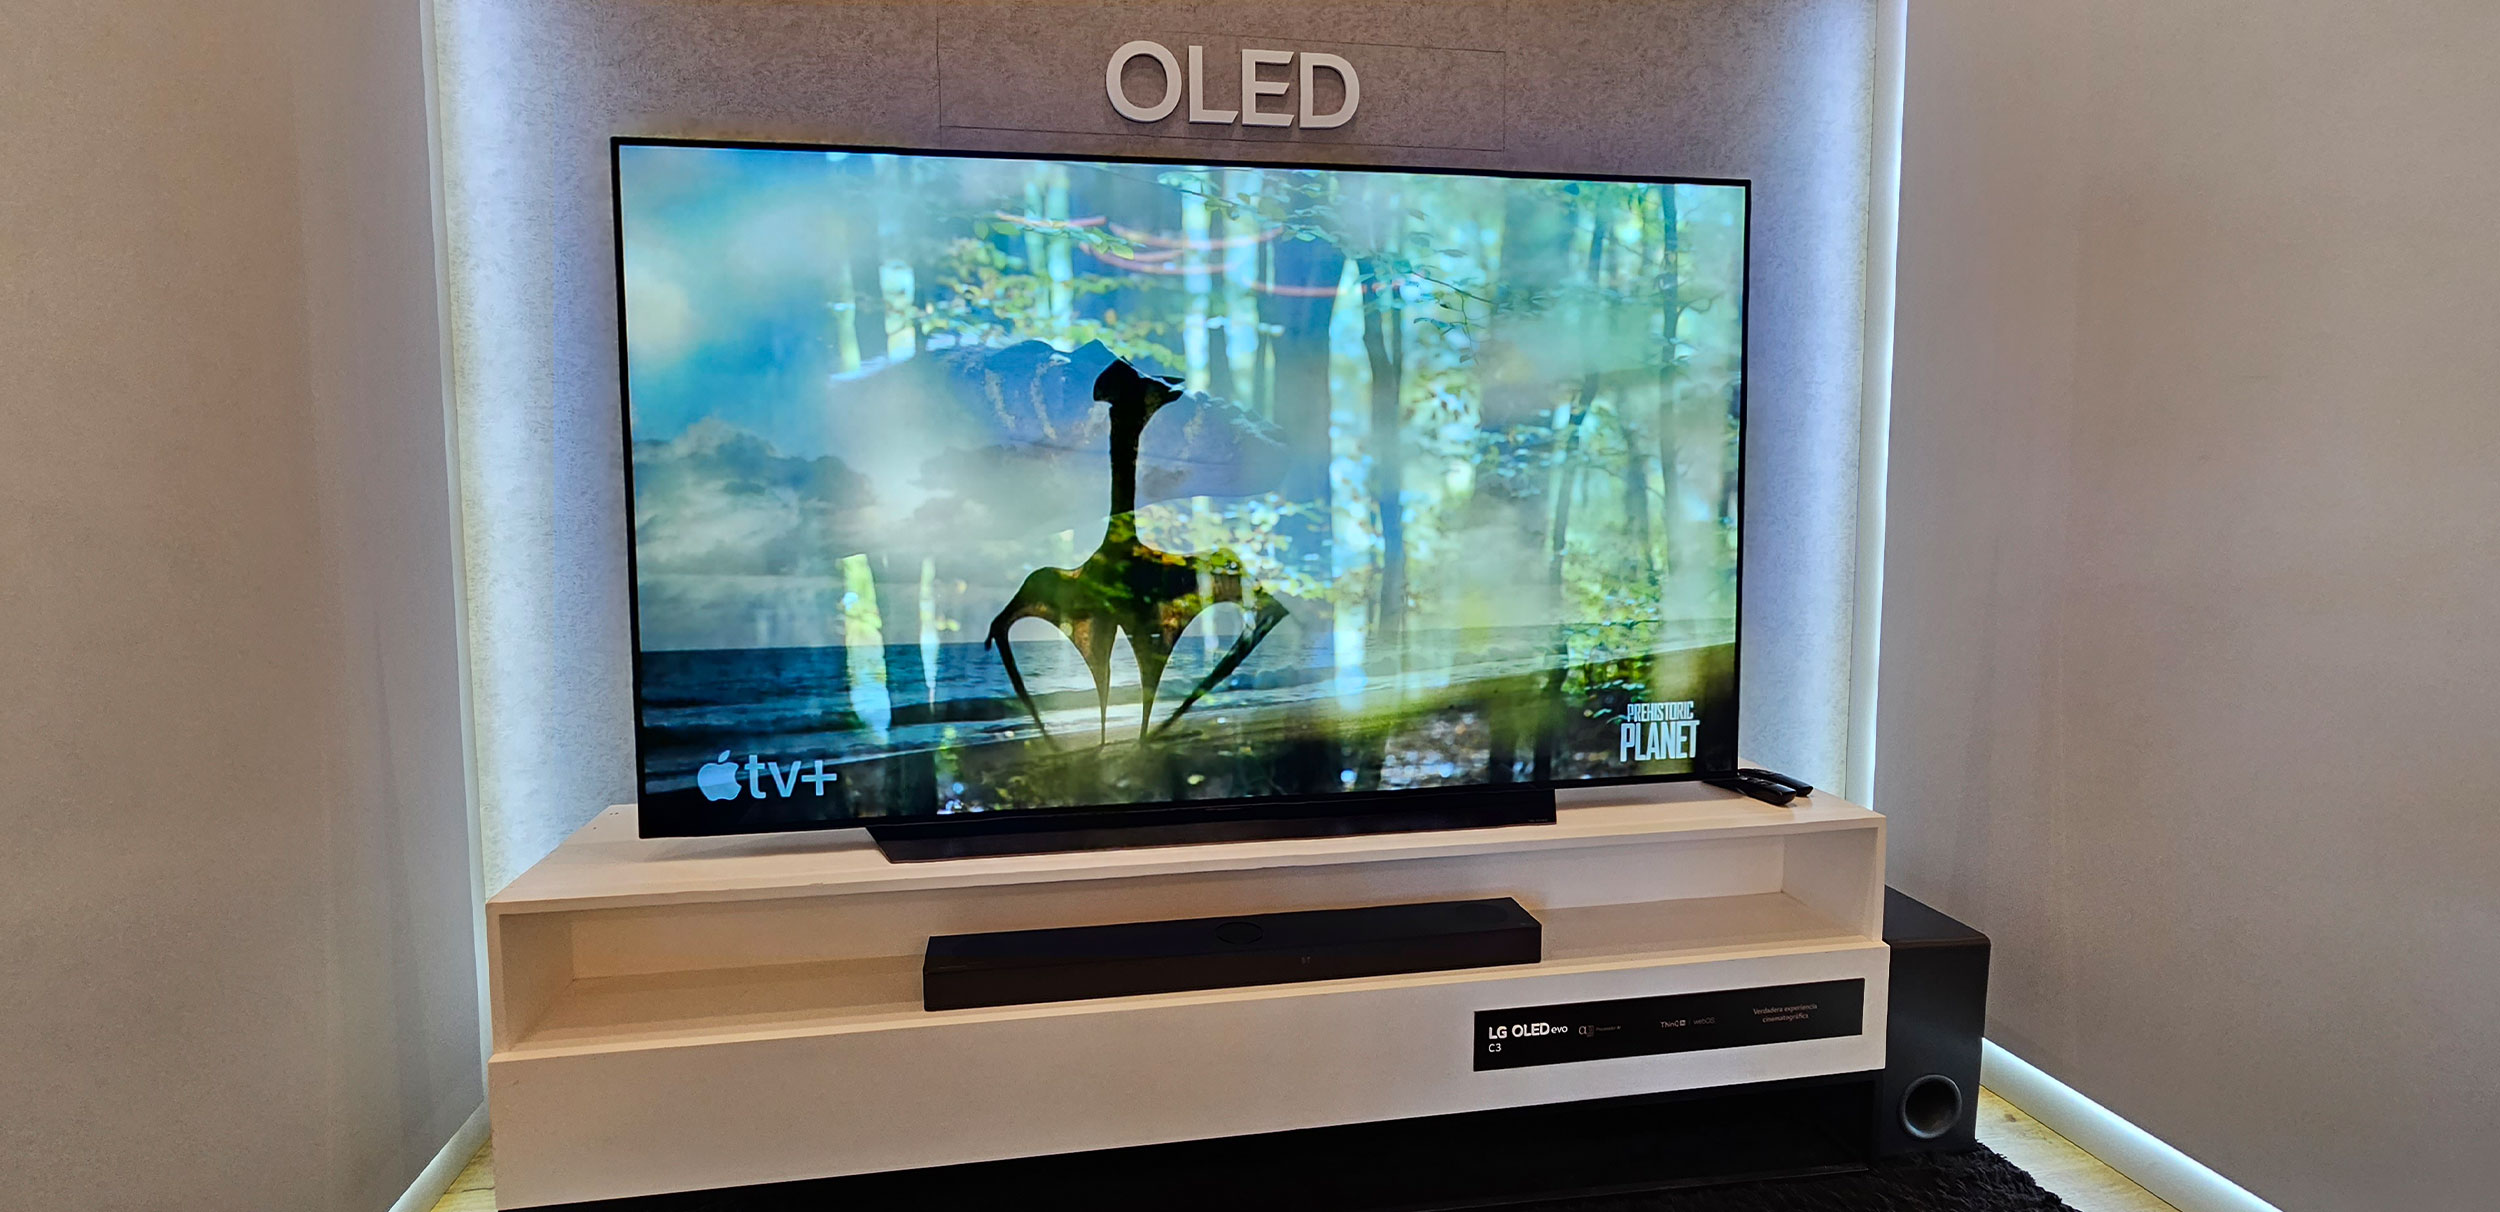 LG presentó sus nuevas TVs OLED EVO ideal para gaming